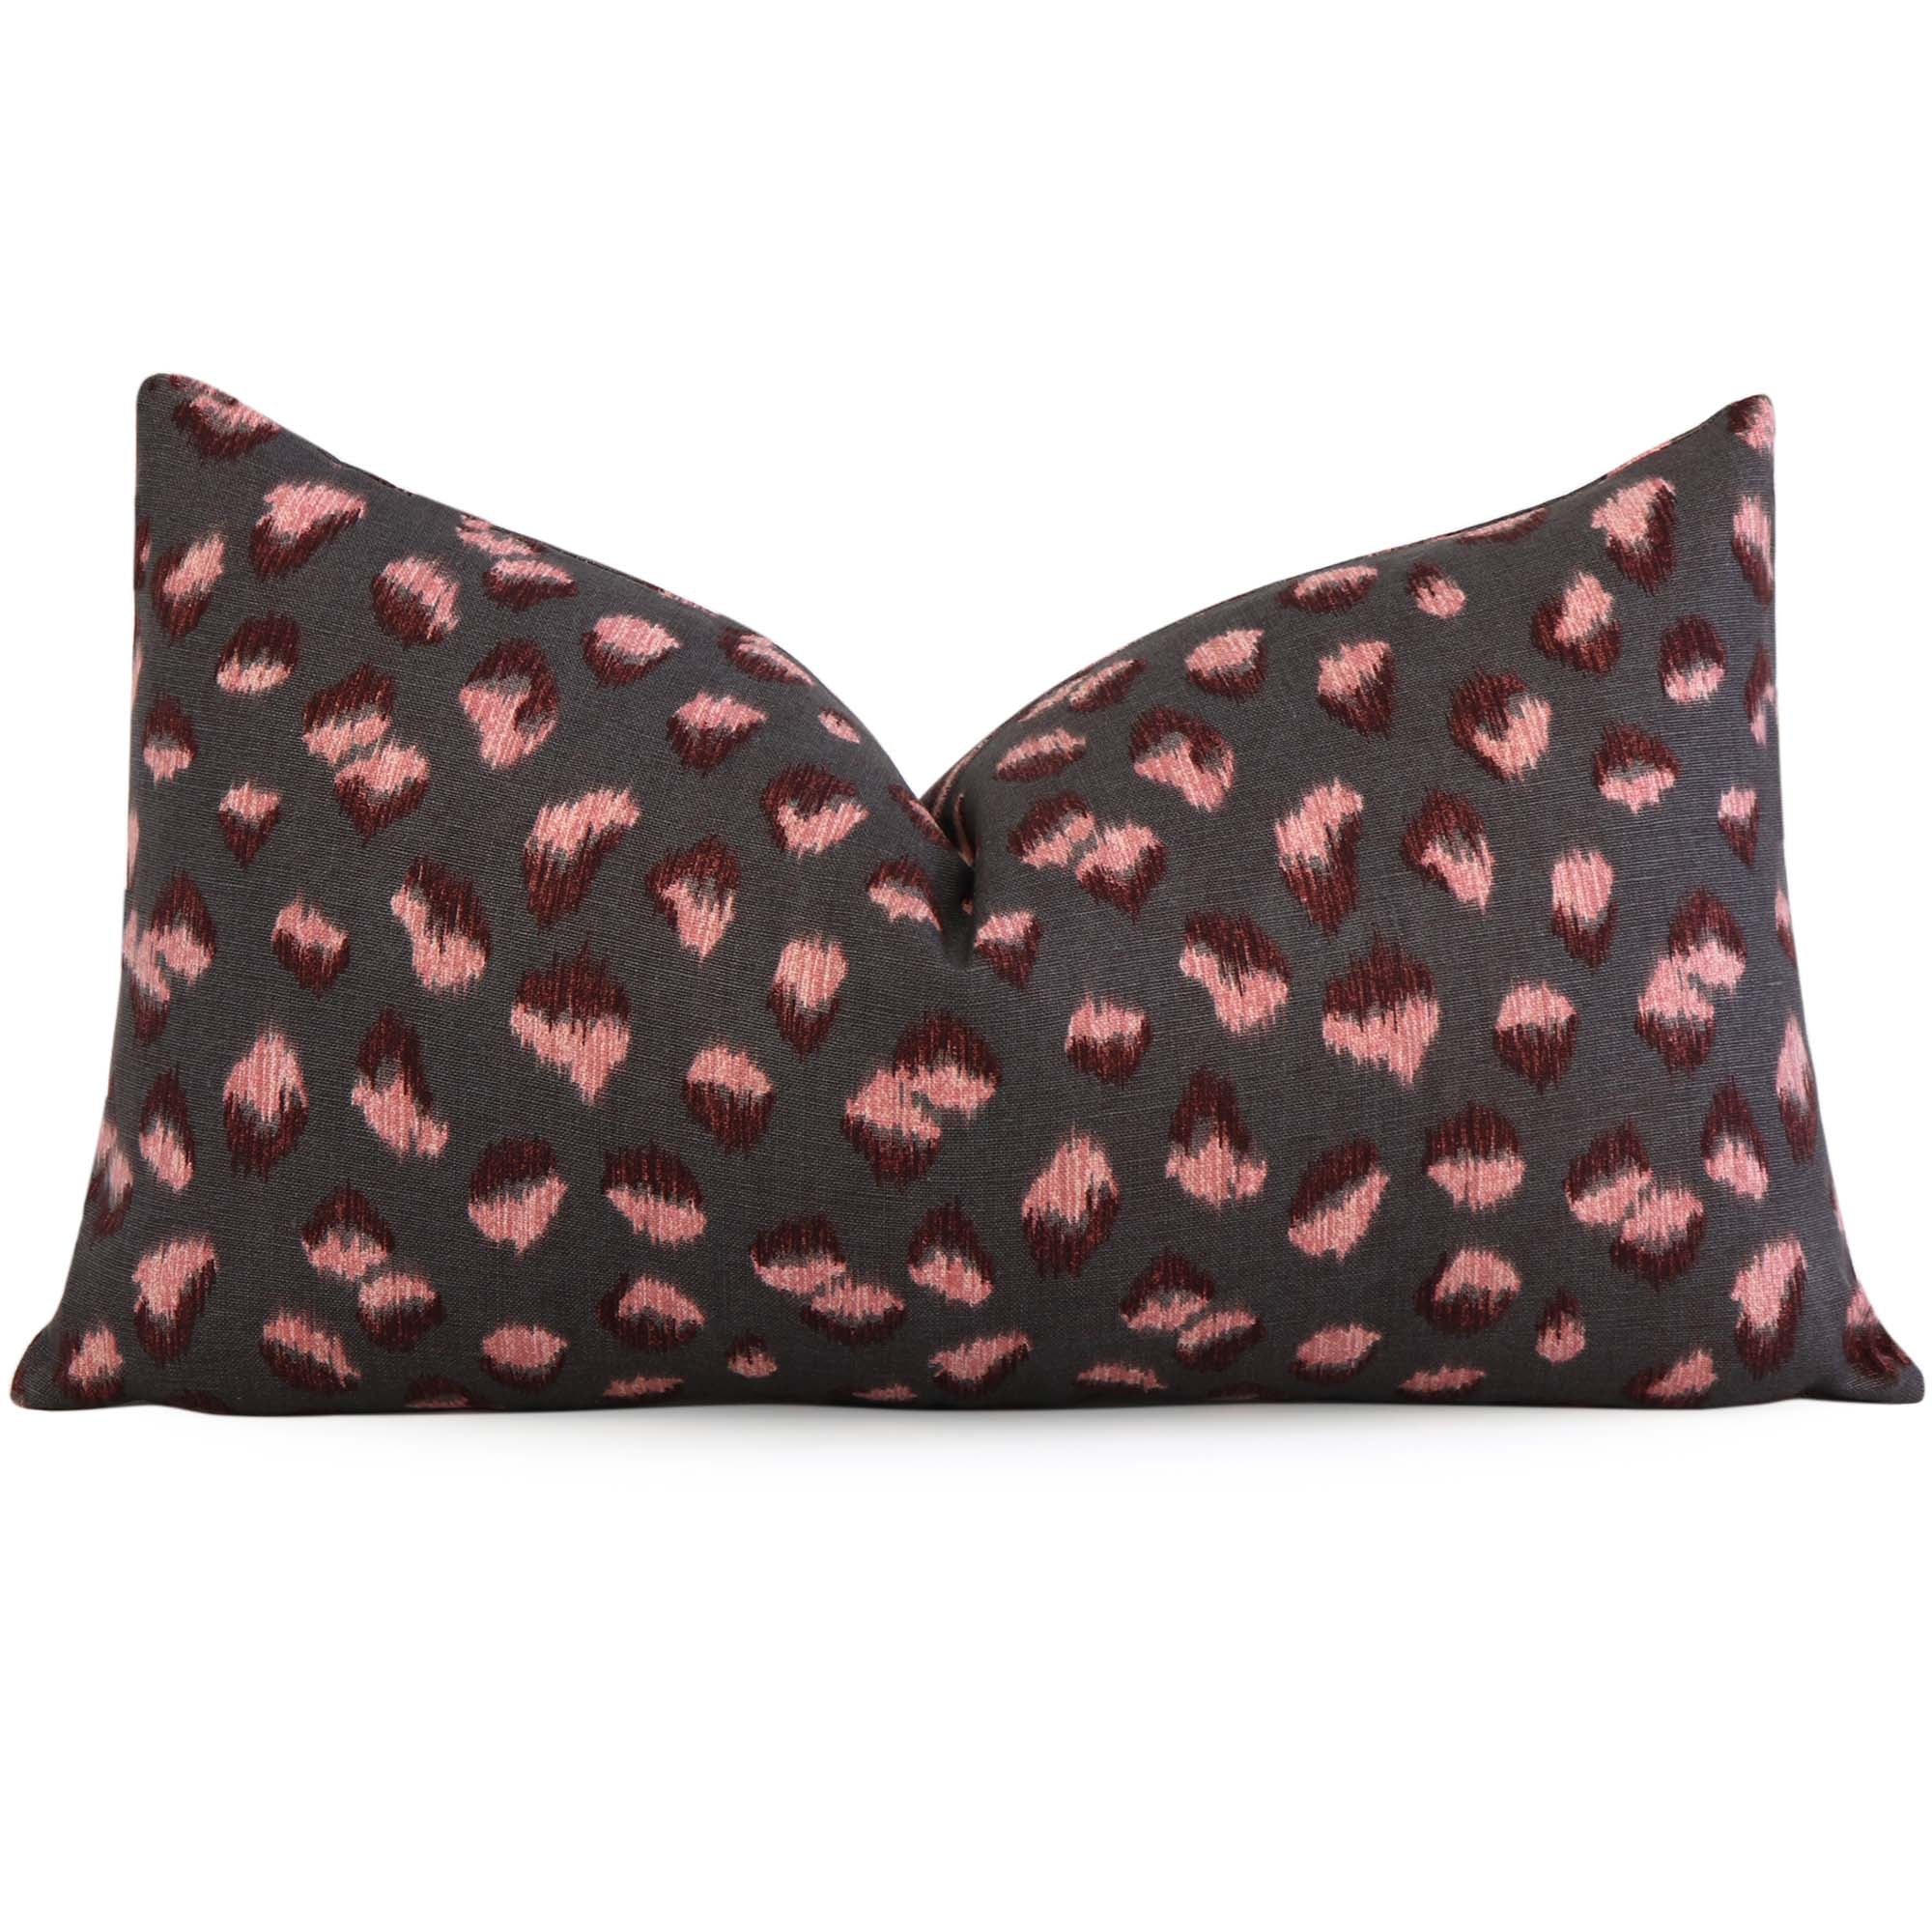 Kelly Wearstler Feline Cheetah Graphite Rose Pink Designer Throw Lumbar Pillow Cover